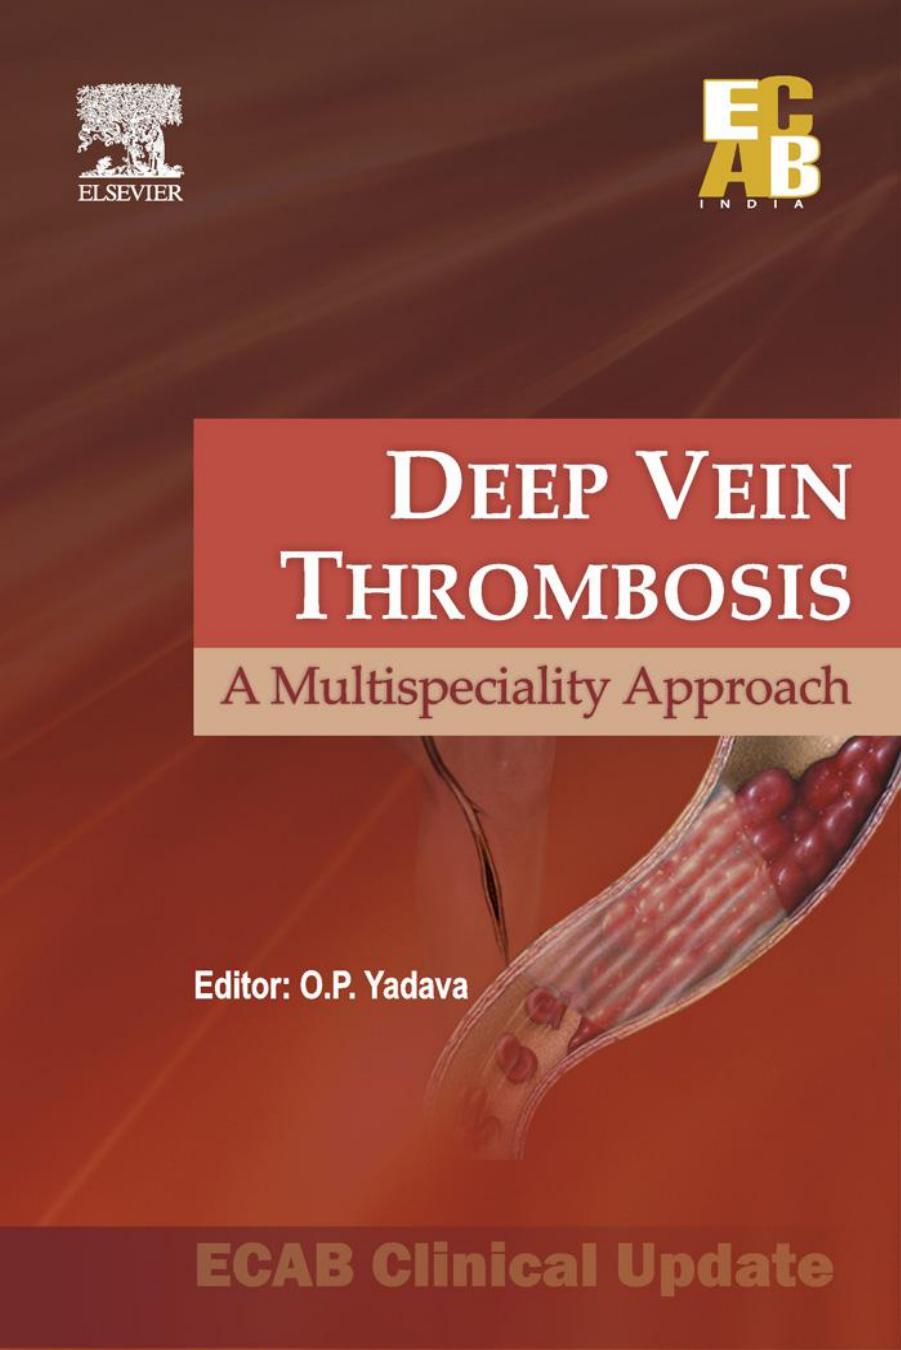 Deep Vein Thrombosis A Multispeciality Approach.jpg